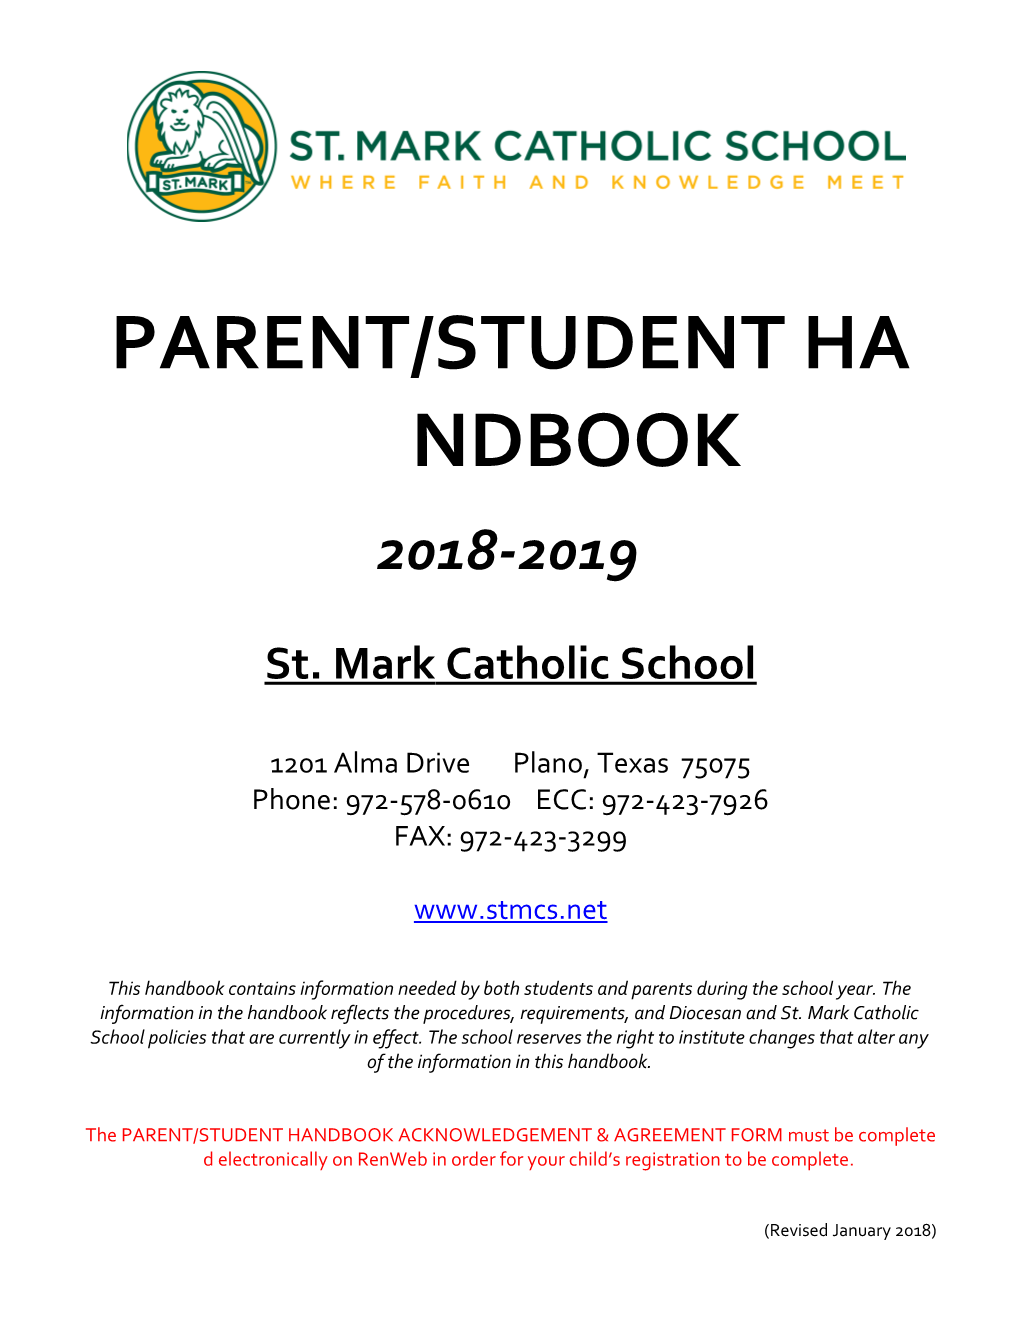 Parent/Student Handbook s8